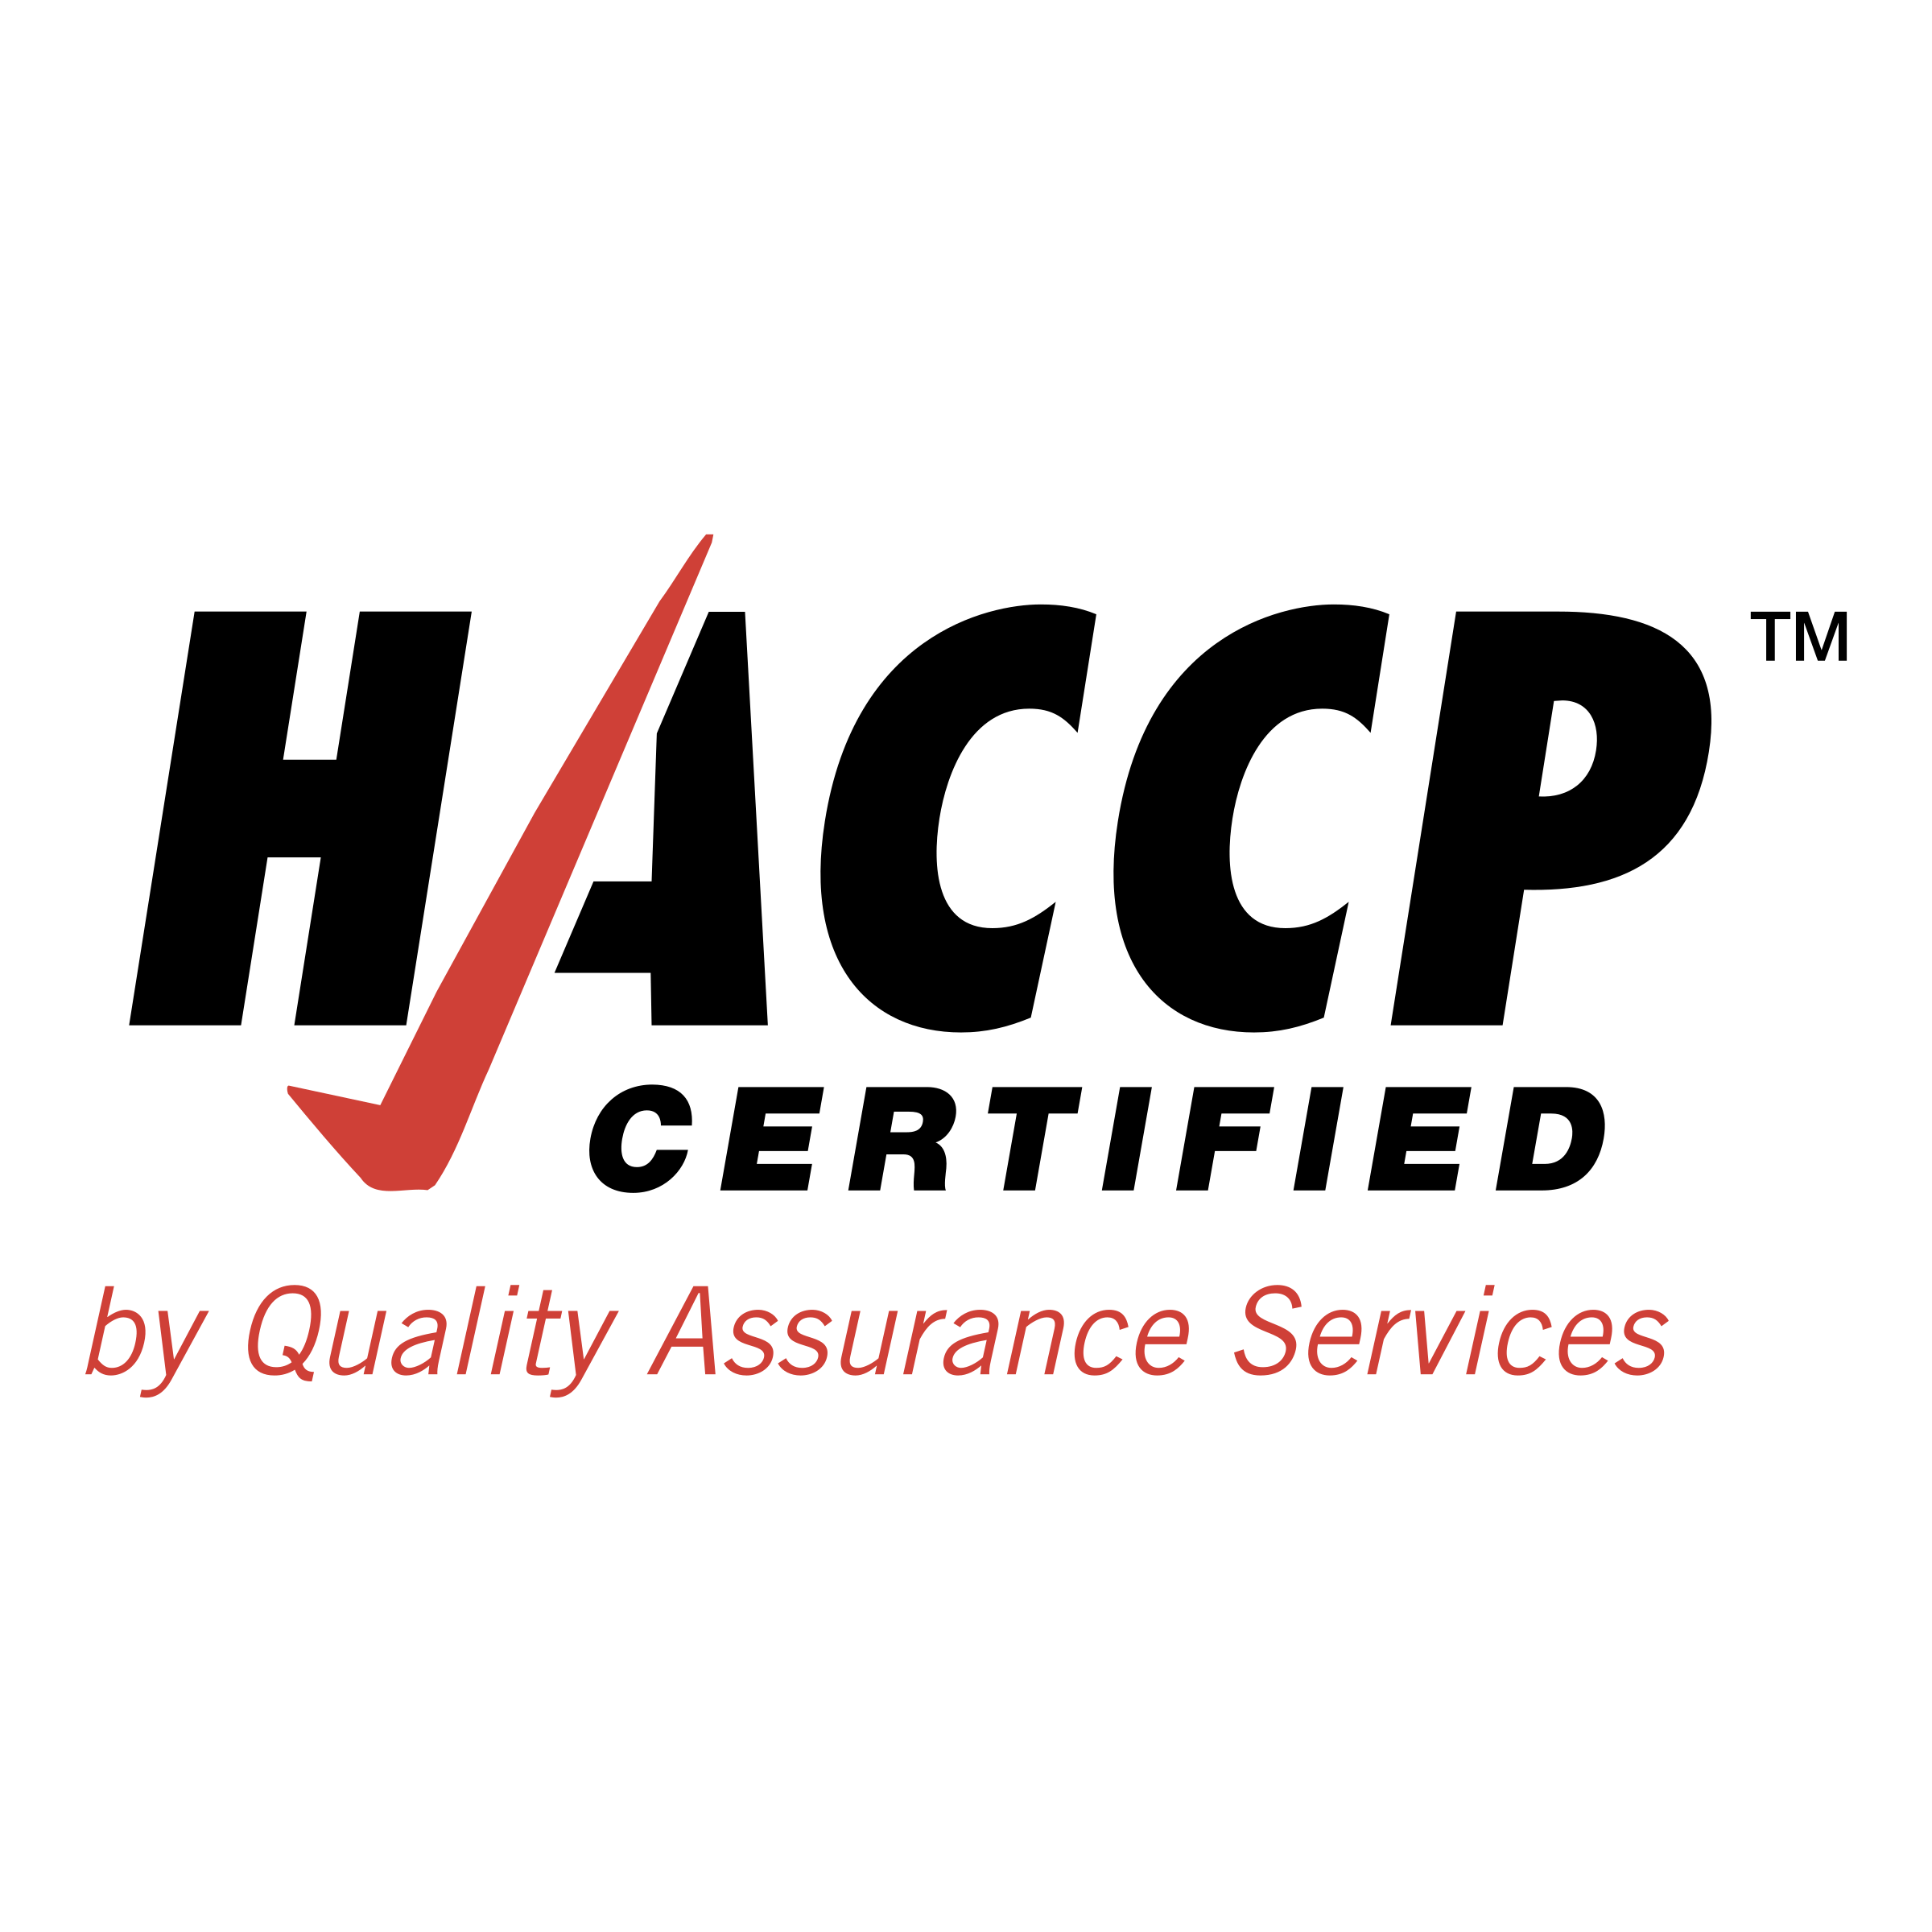 HACCP Logo - HACCP Logo PNG Transparent & SVG Vector - Freebie Supply